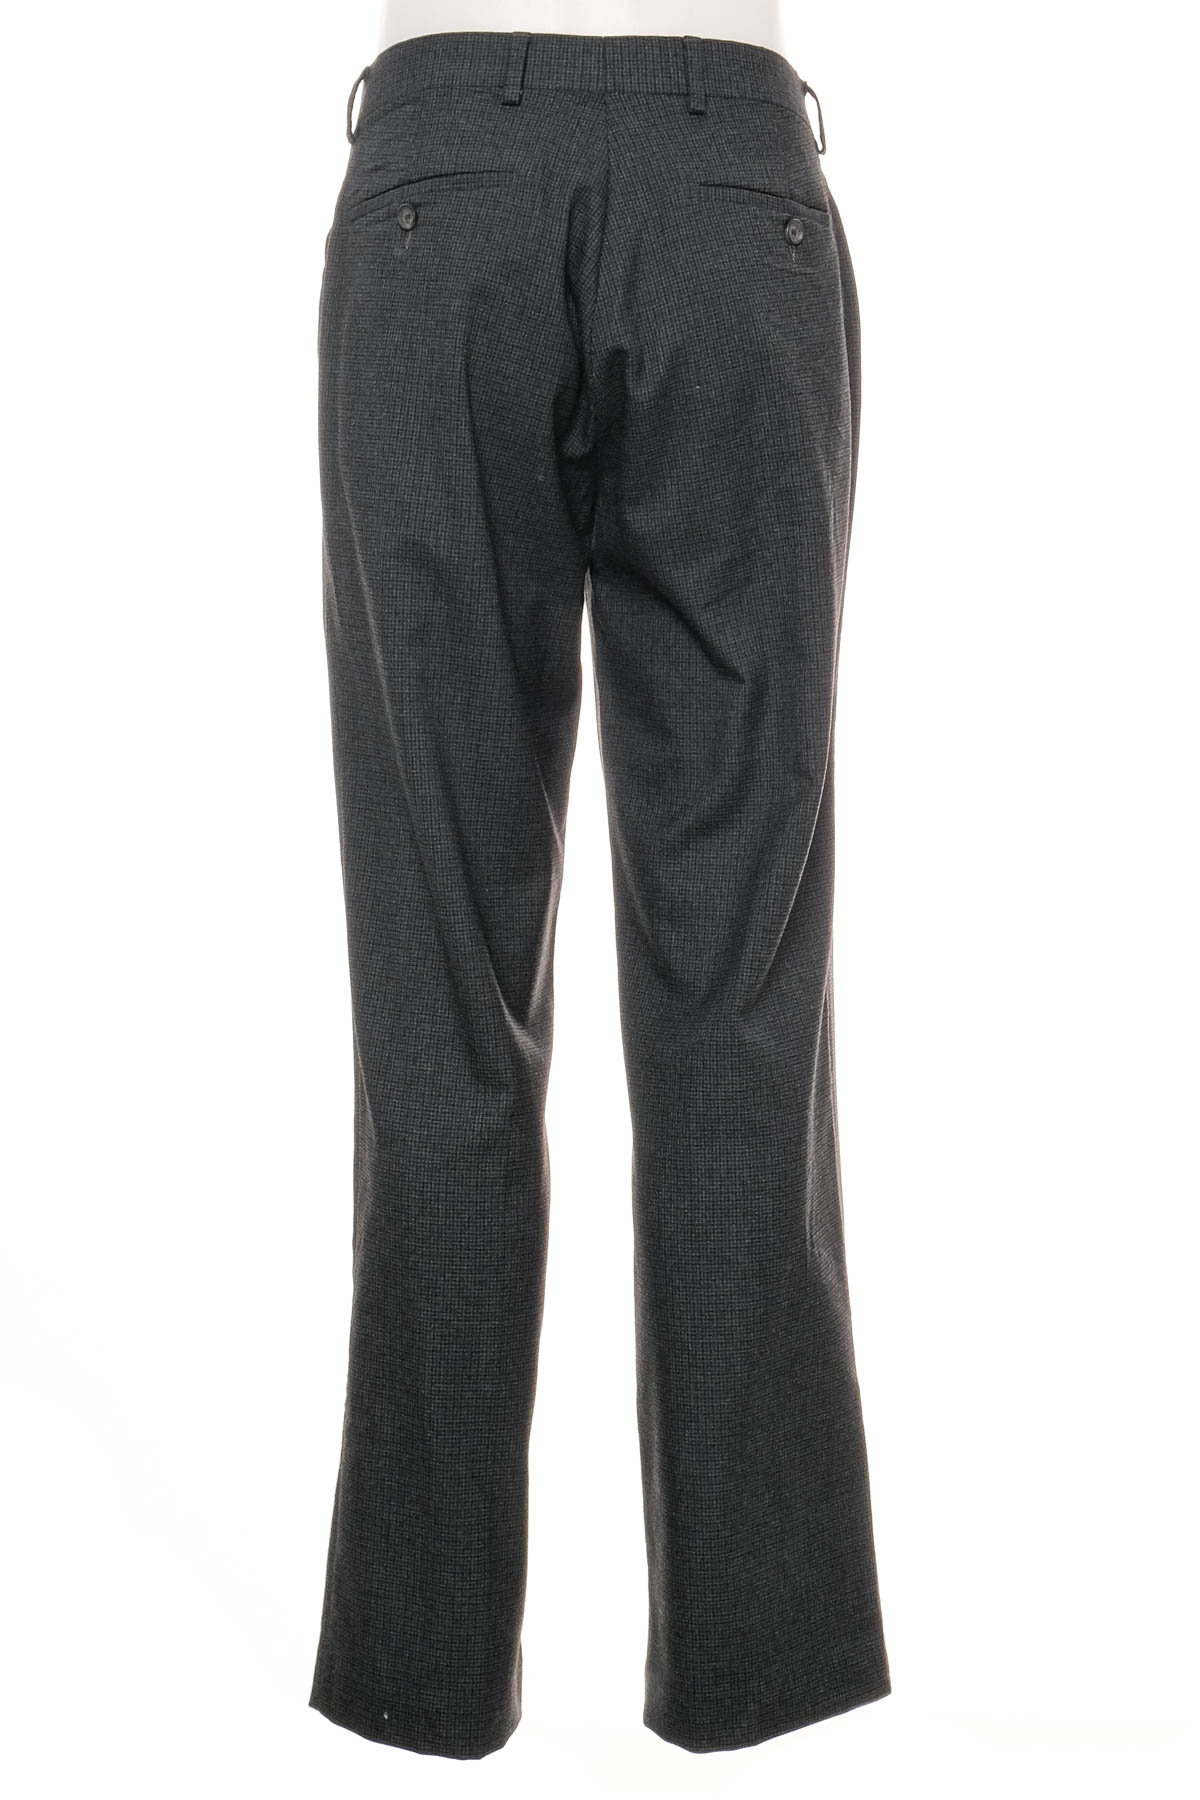 Pantalon pentru bărbați - Ralph Lauren - 1